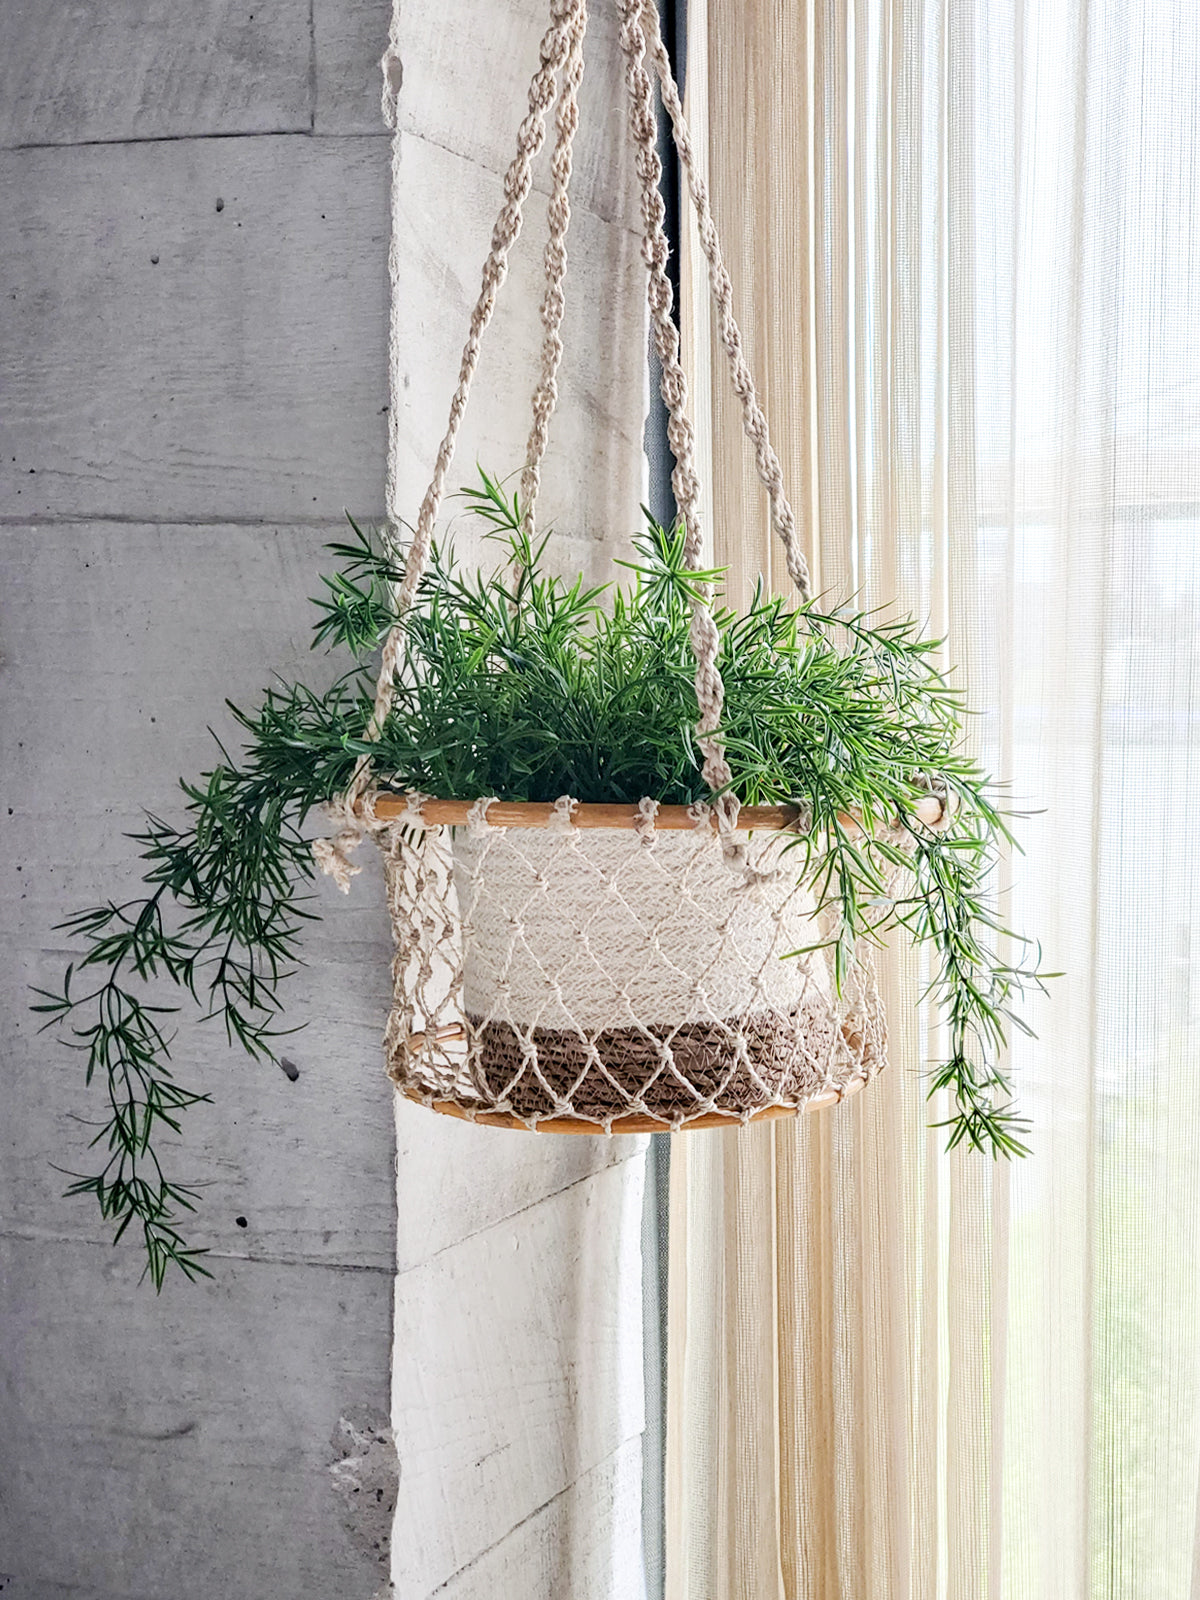  Jhuri Single Hanging Basket by KORISSA KORISSA Perfumarie